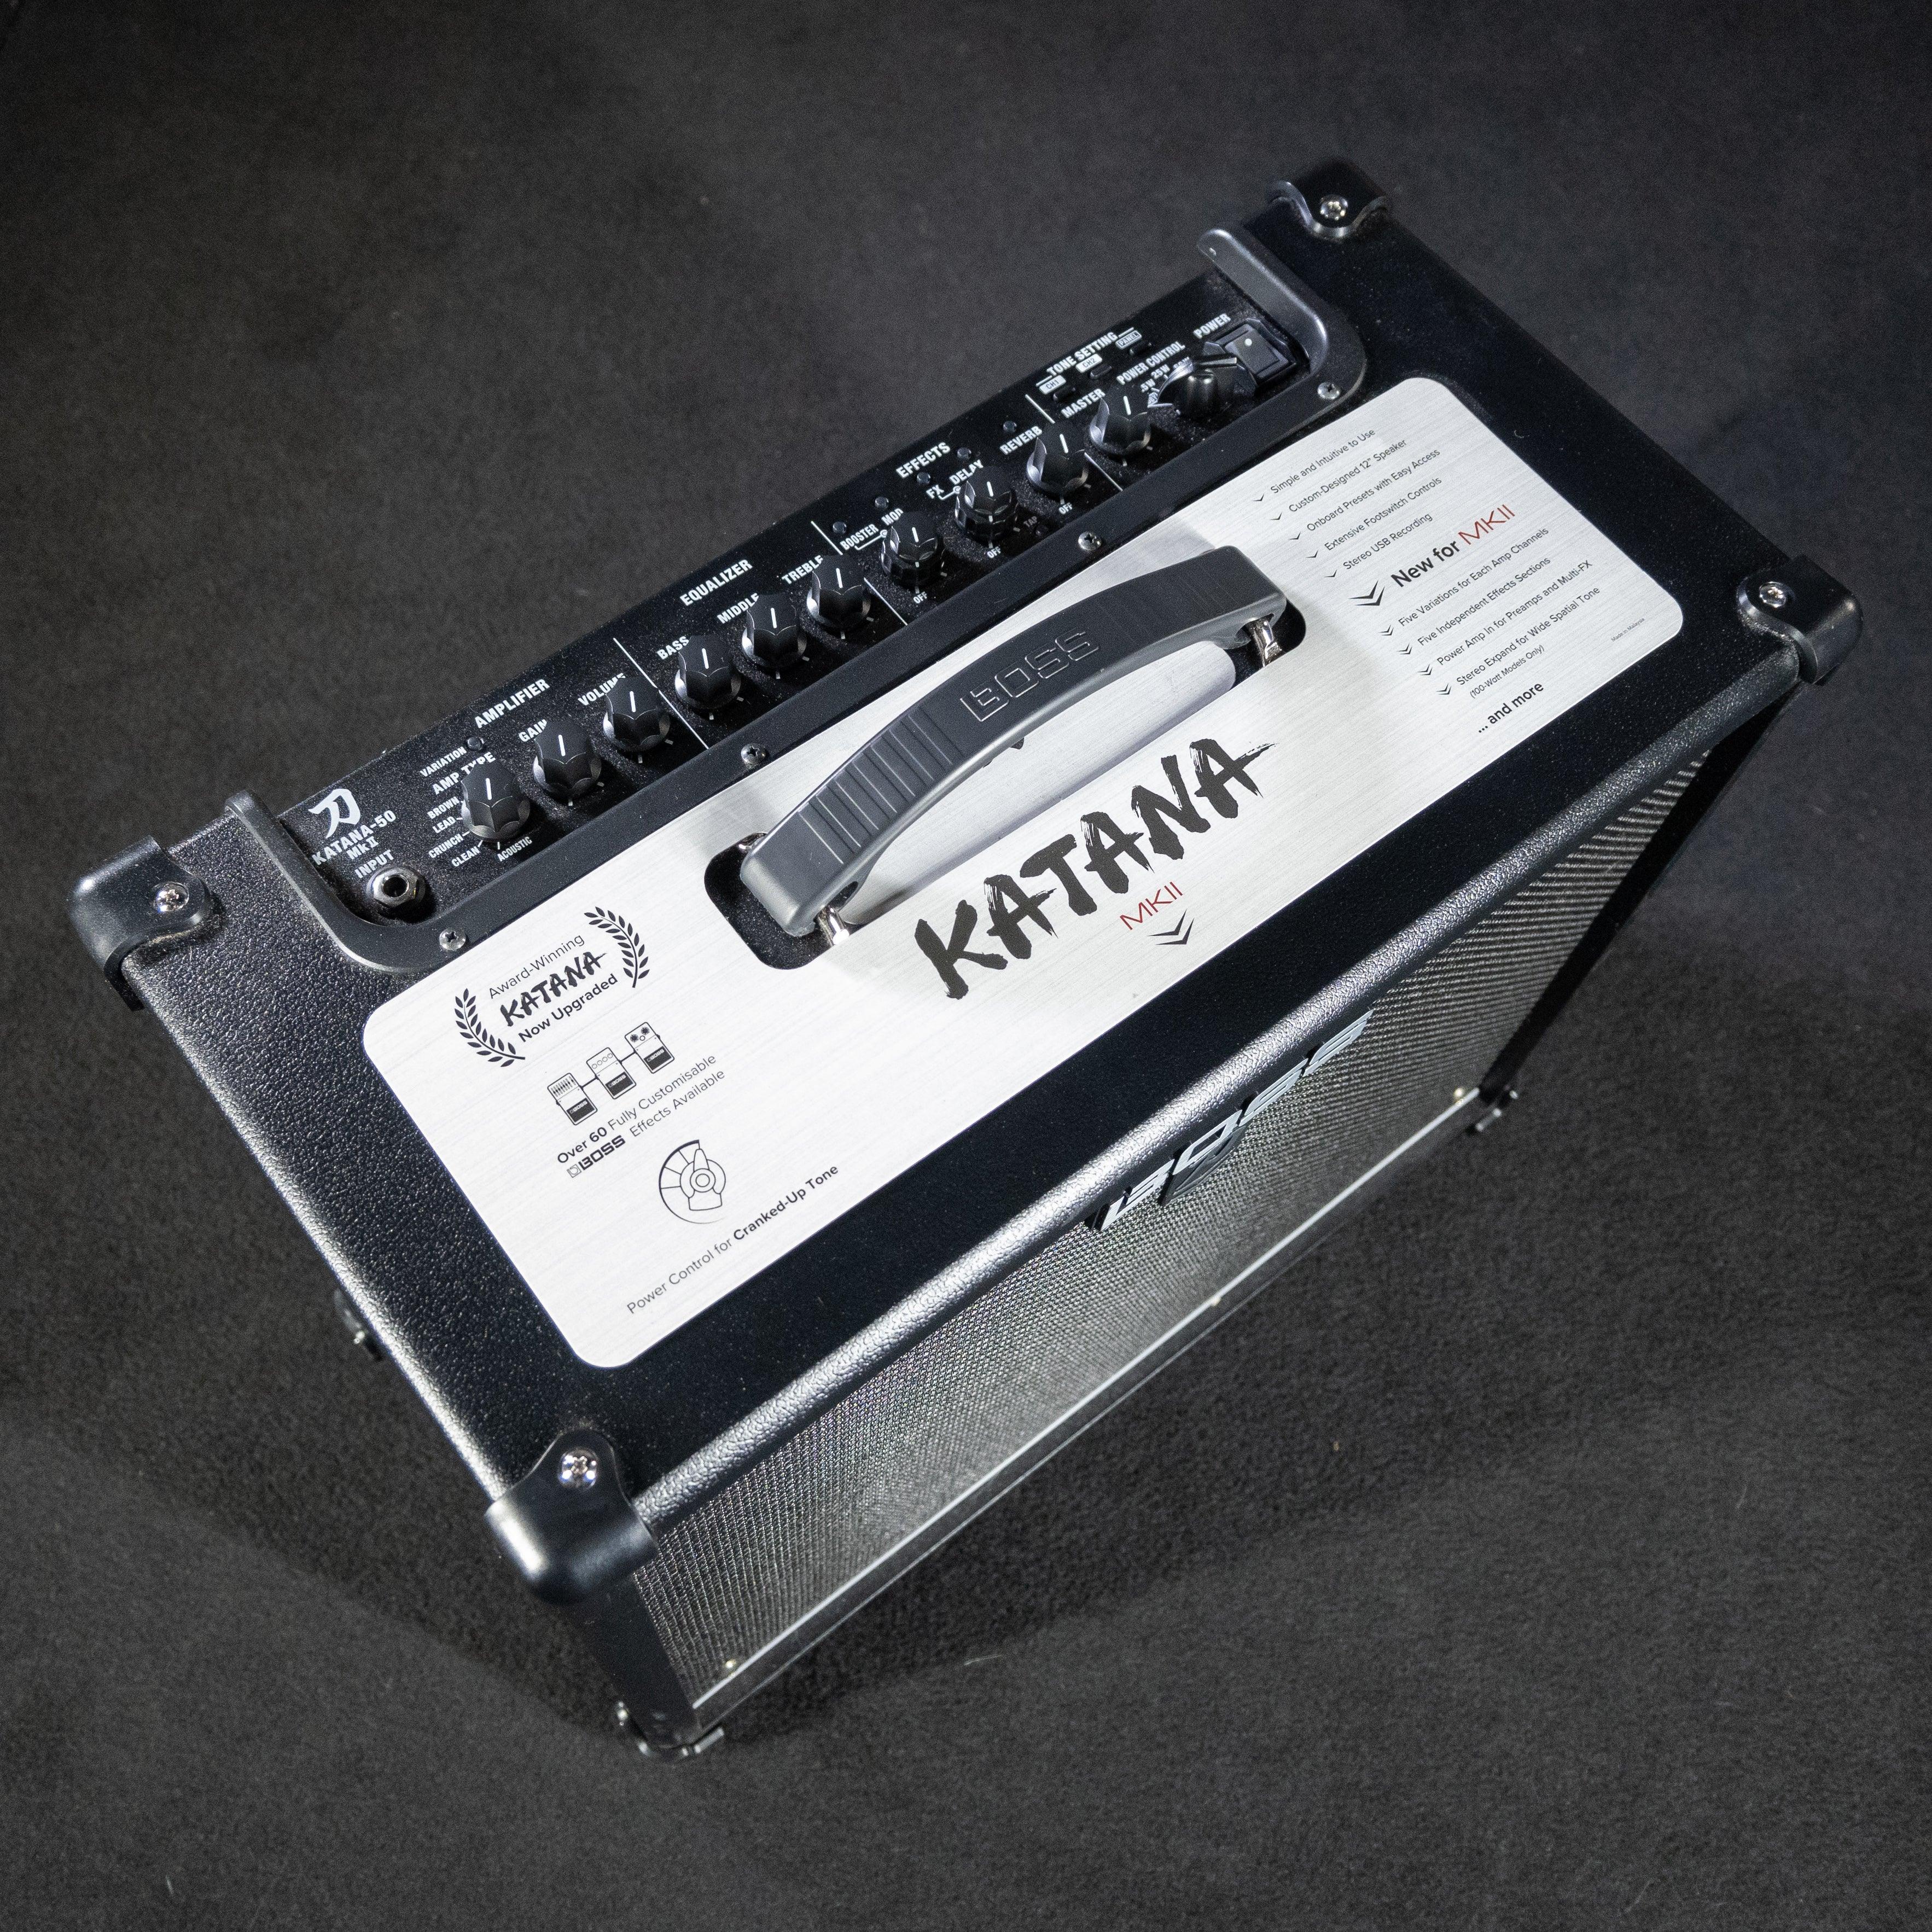 Boss Katana-50 MKII Guitar Amplifier